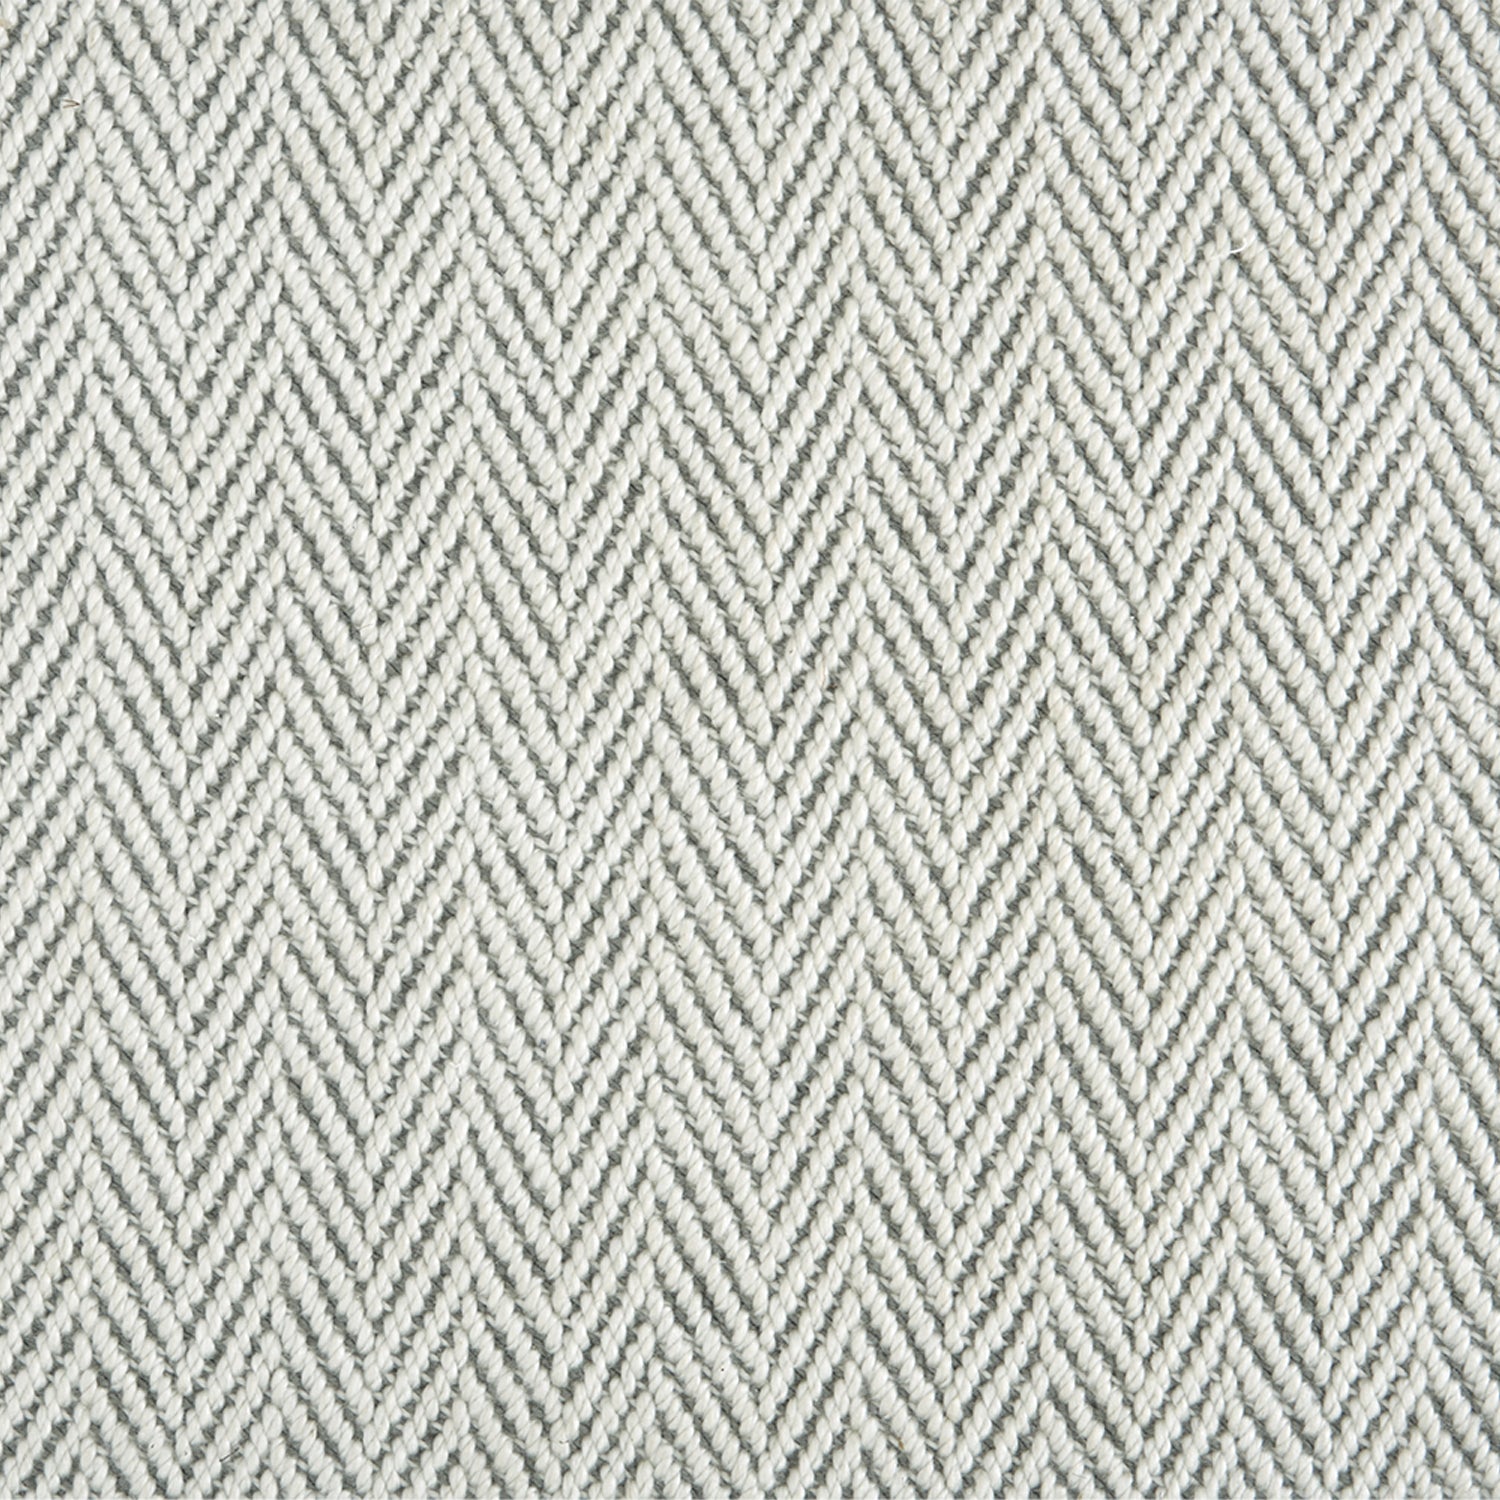 Nylon broadloom carpet swatch in a textured herringbone weave in mottled white and gray.